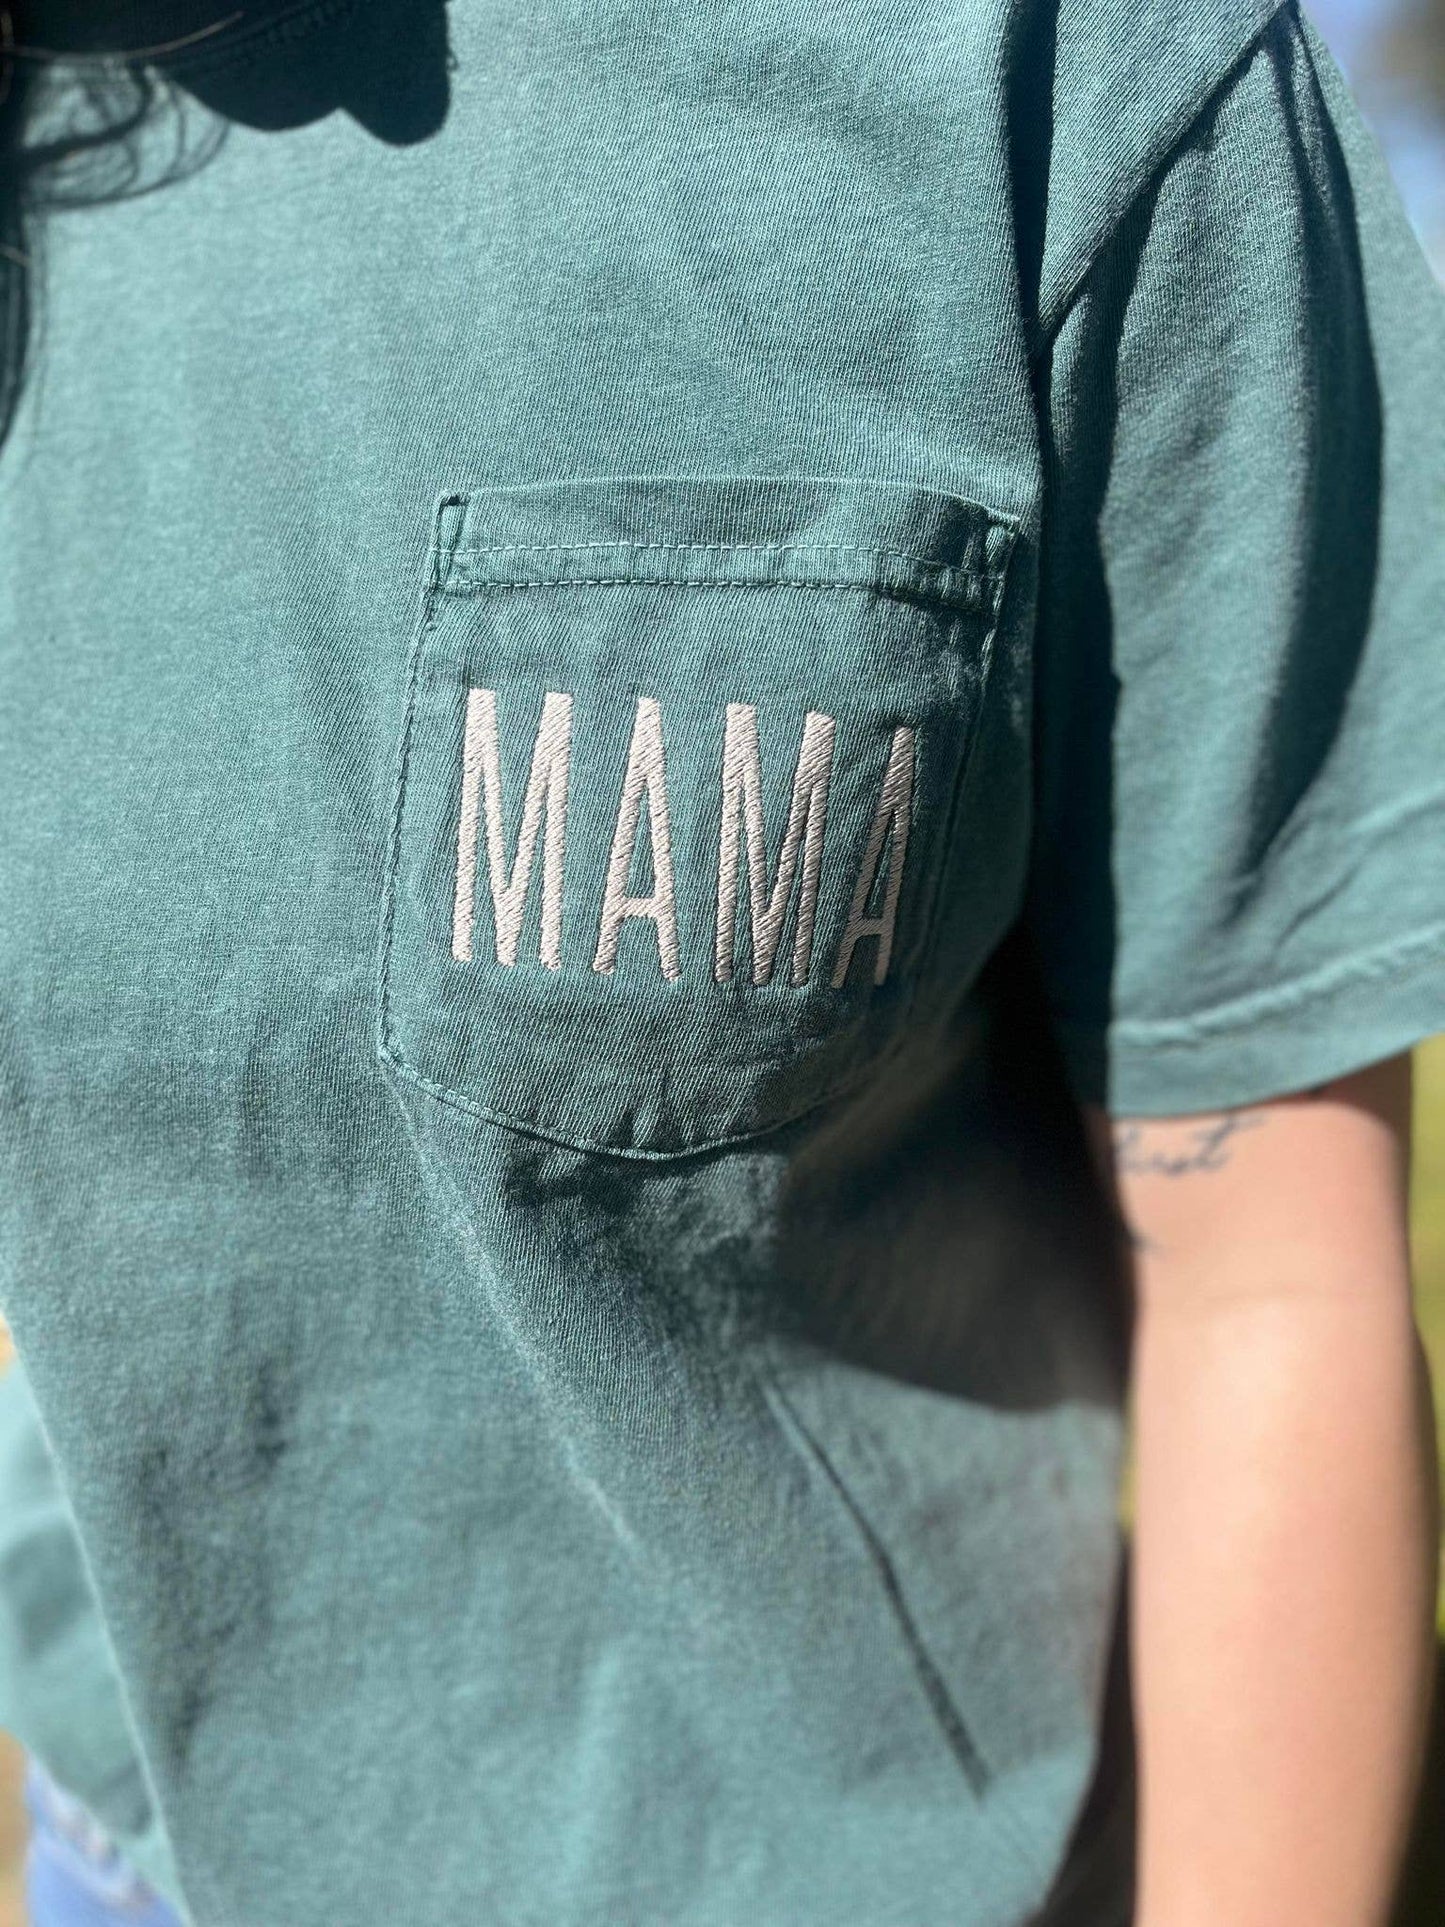 Embroidered Mama Blue Spruce Pocket Tee